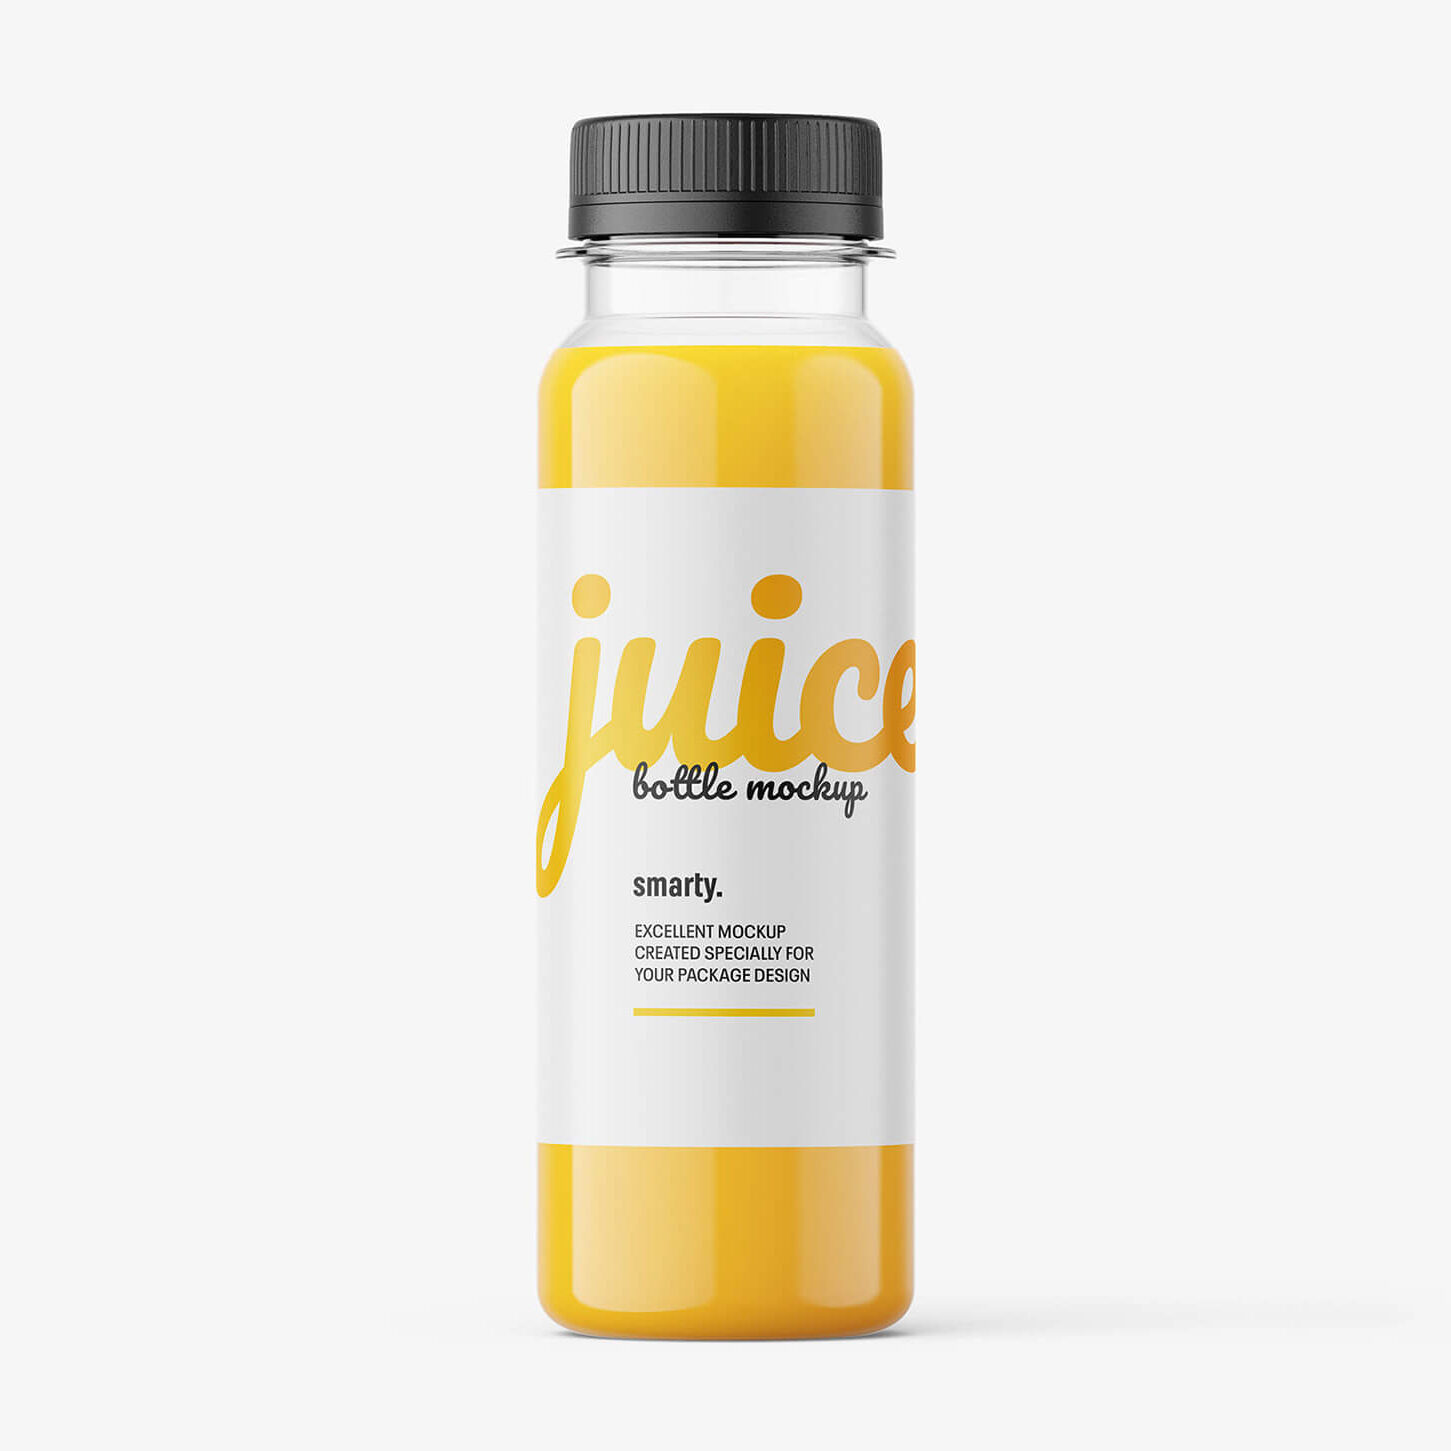 Free-Orange-Juice-Bottle-Mockup-PSD.jpg